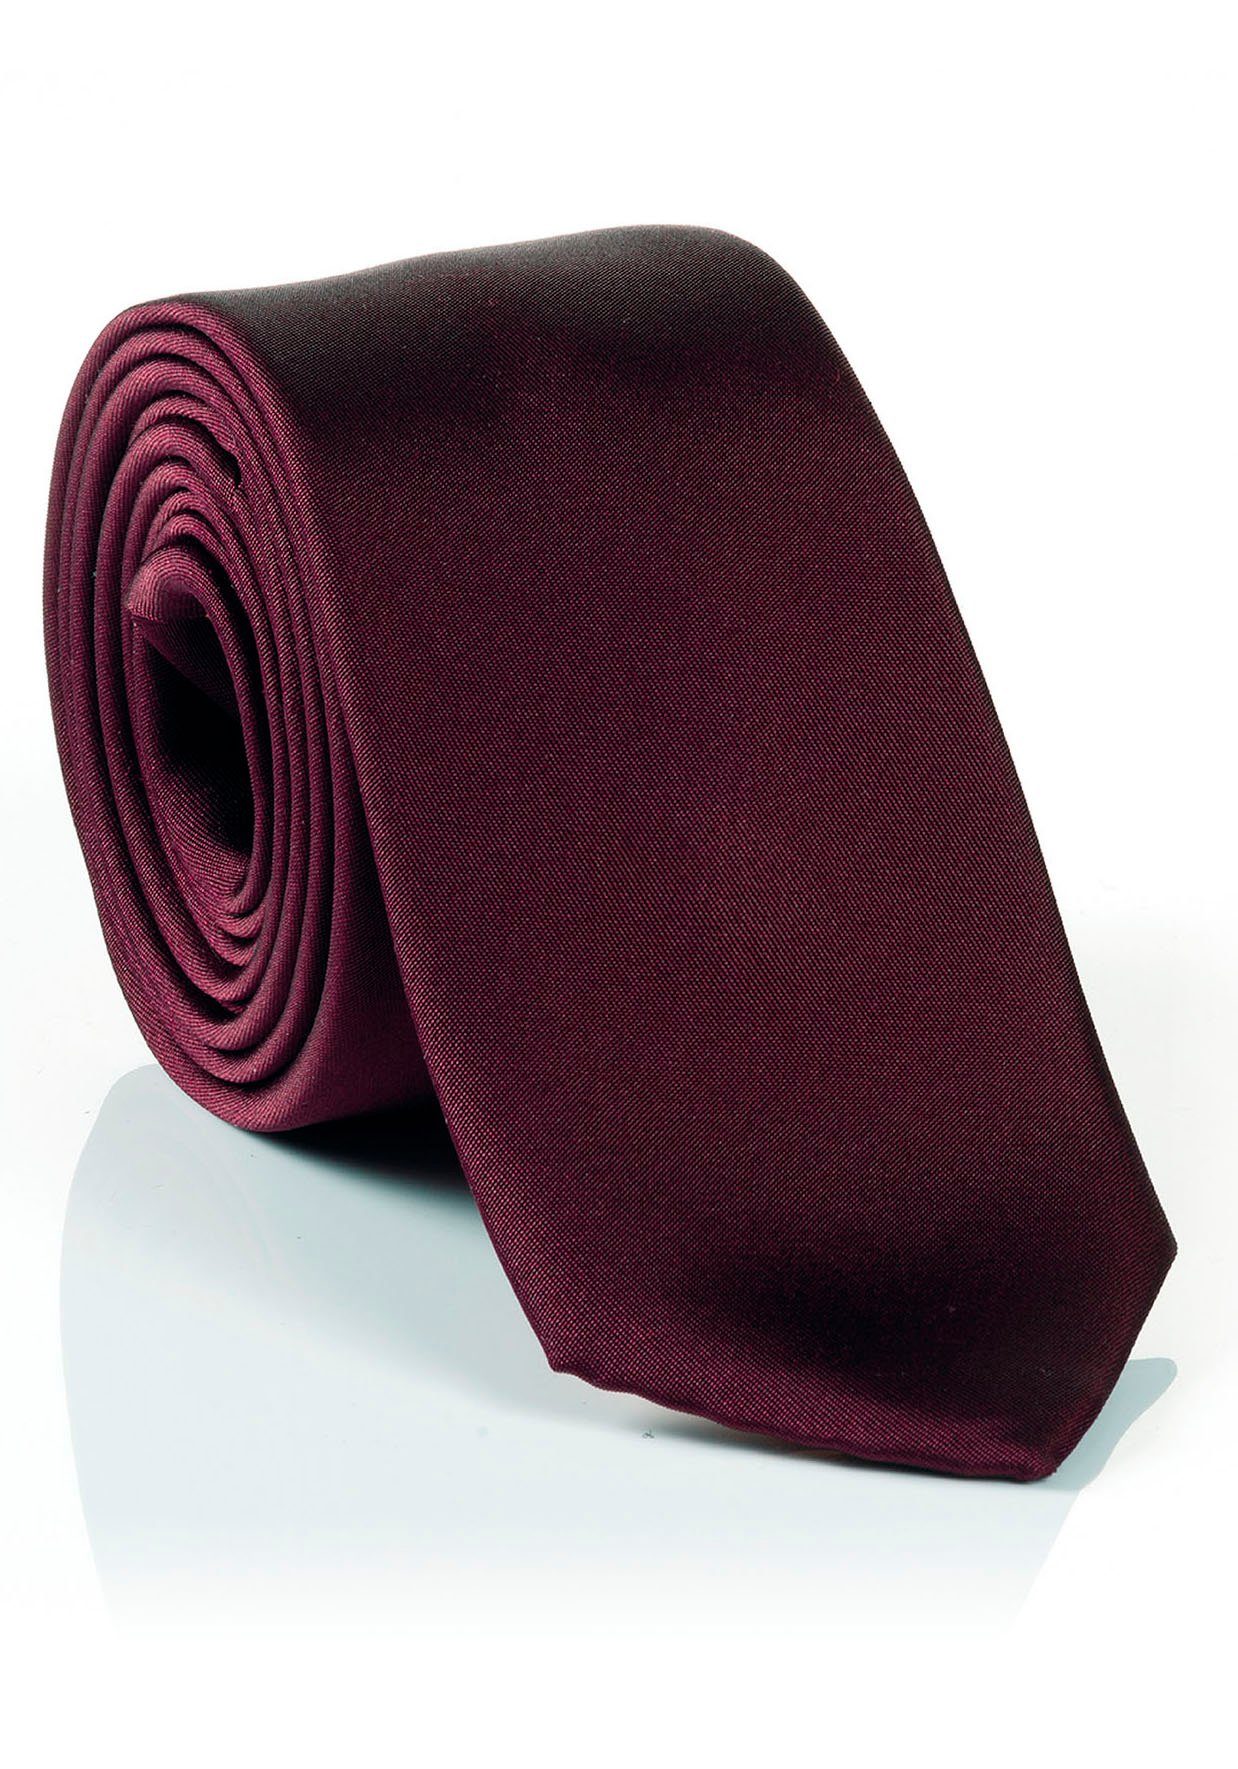 MONTI Krawatte aus reiner bordeaux Seide, Uni-Pastellfarben